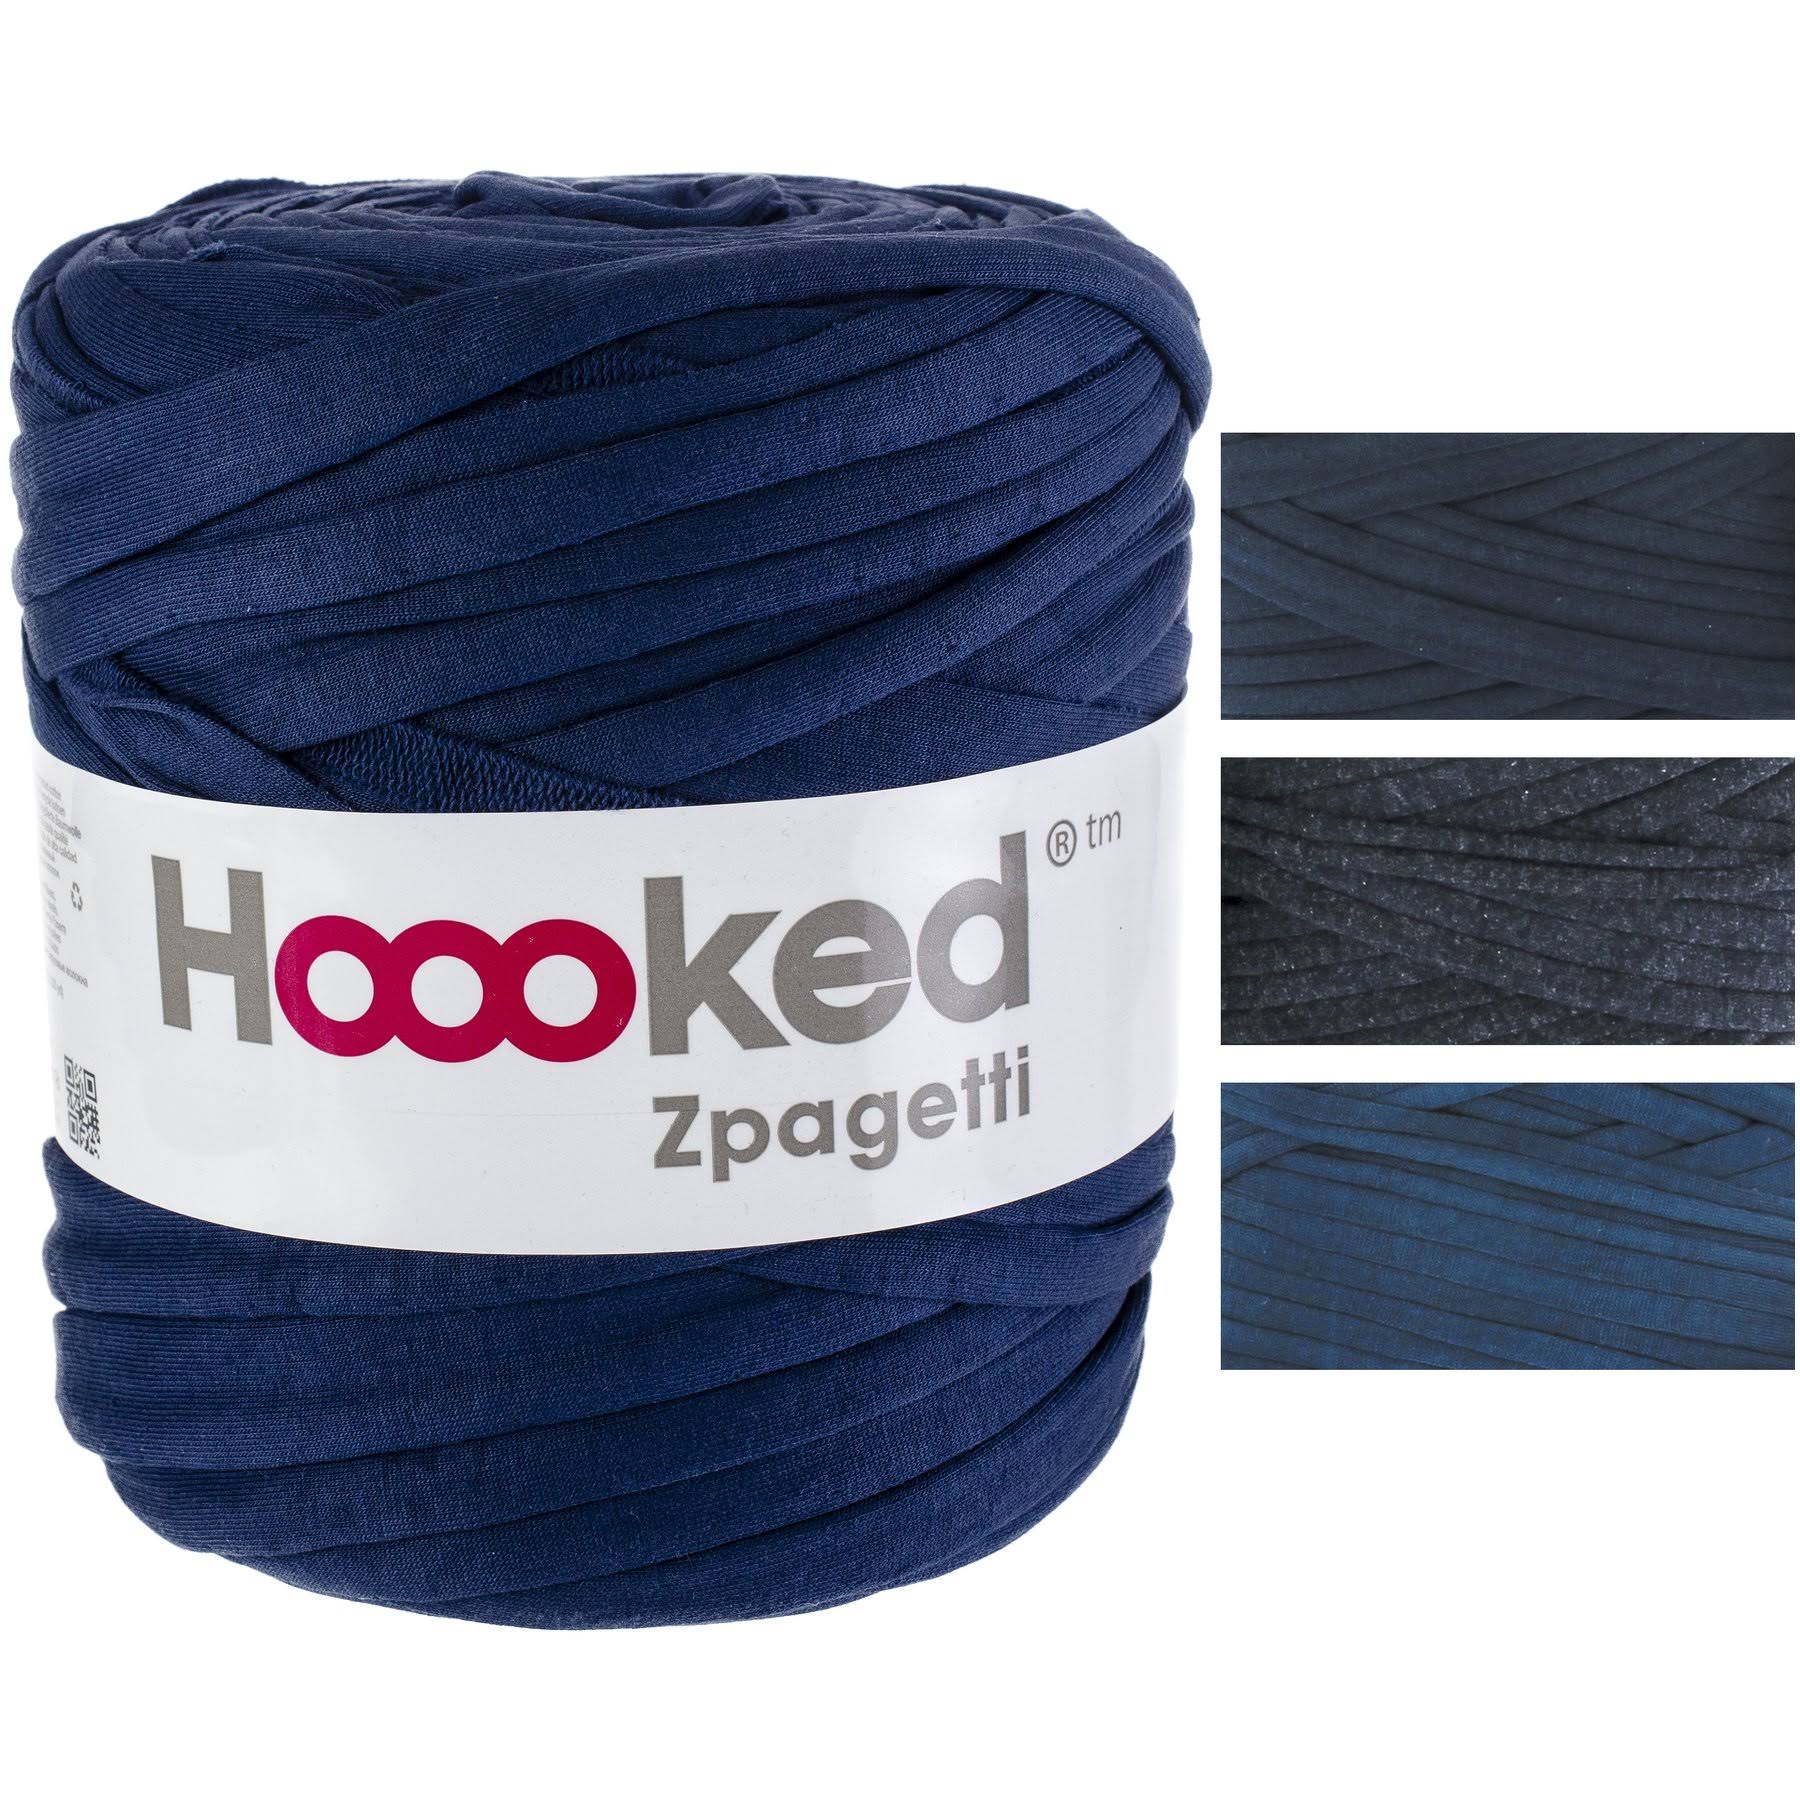 Hoooked Zpagetti Yarn-Sailor Blue - Dark Blue Shades